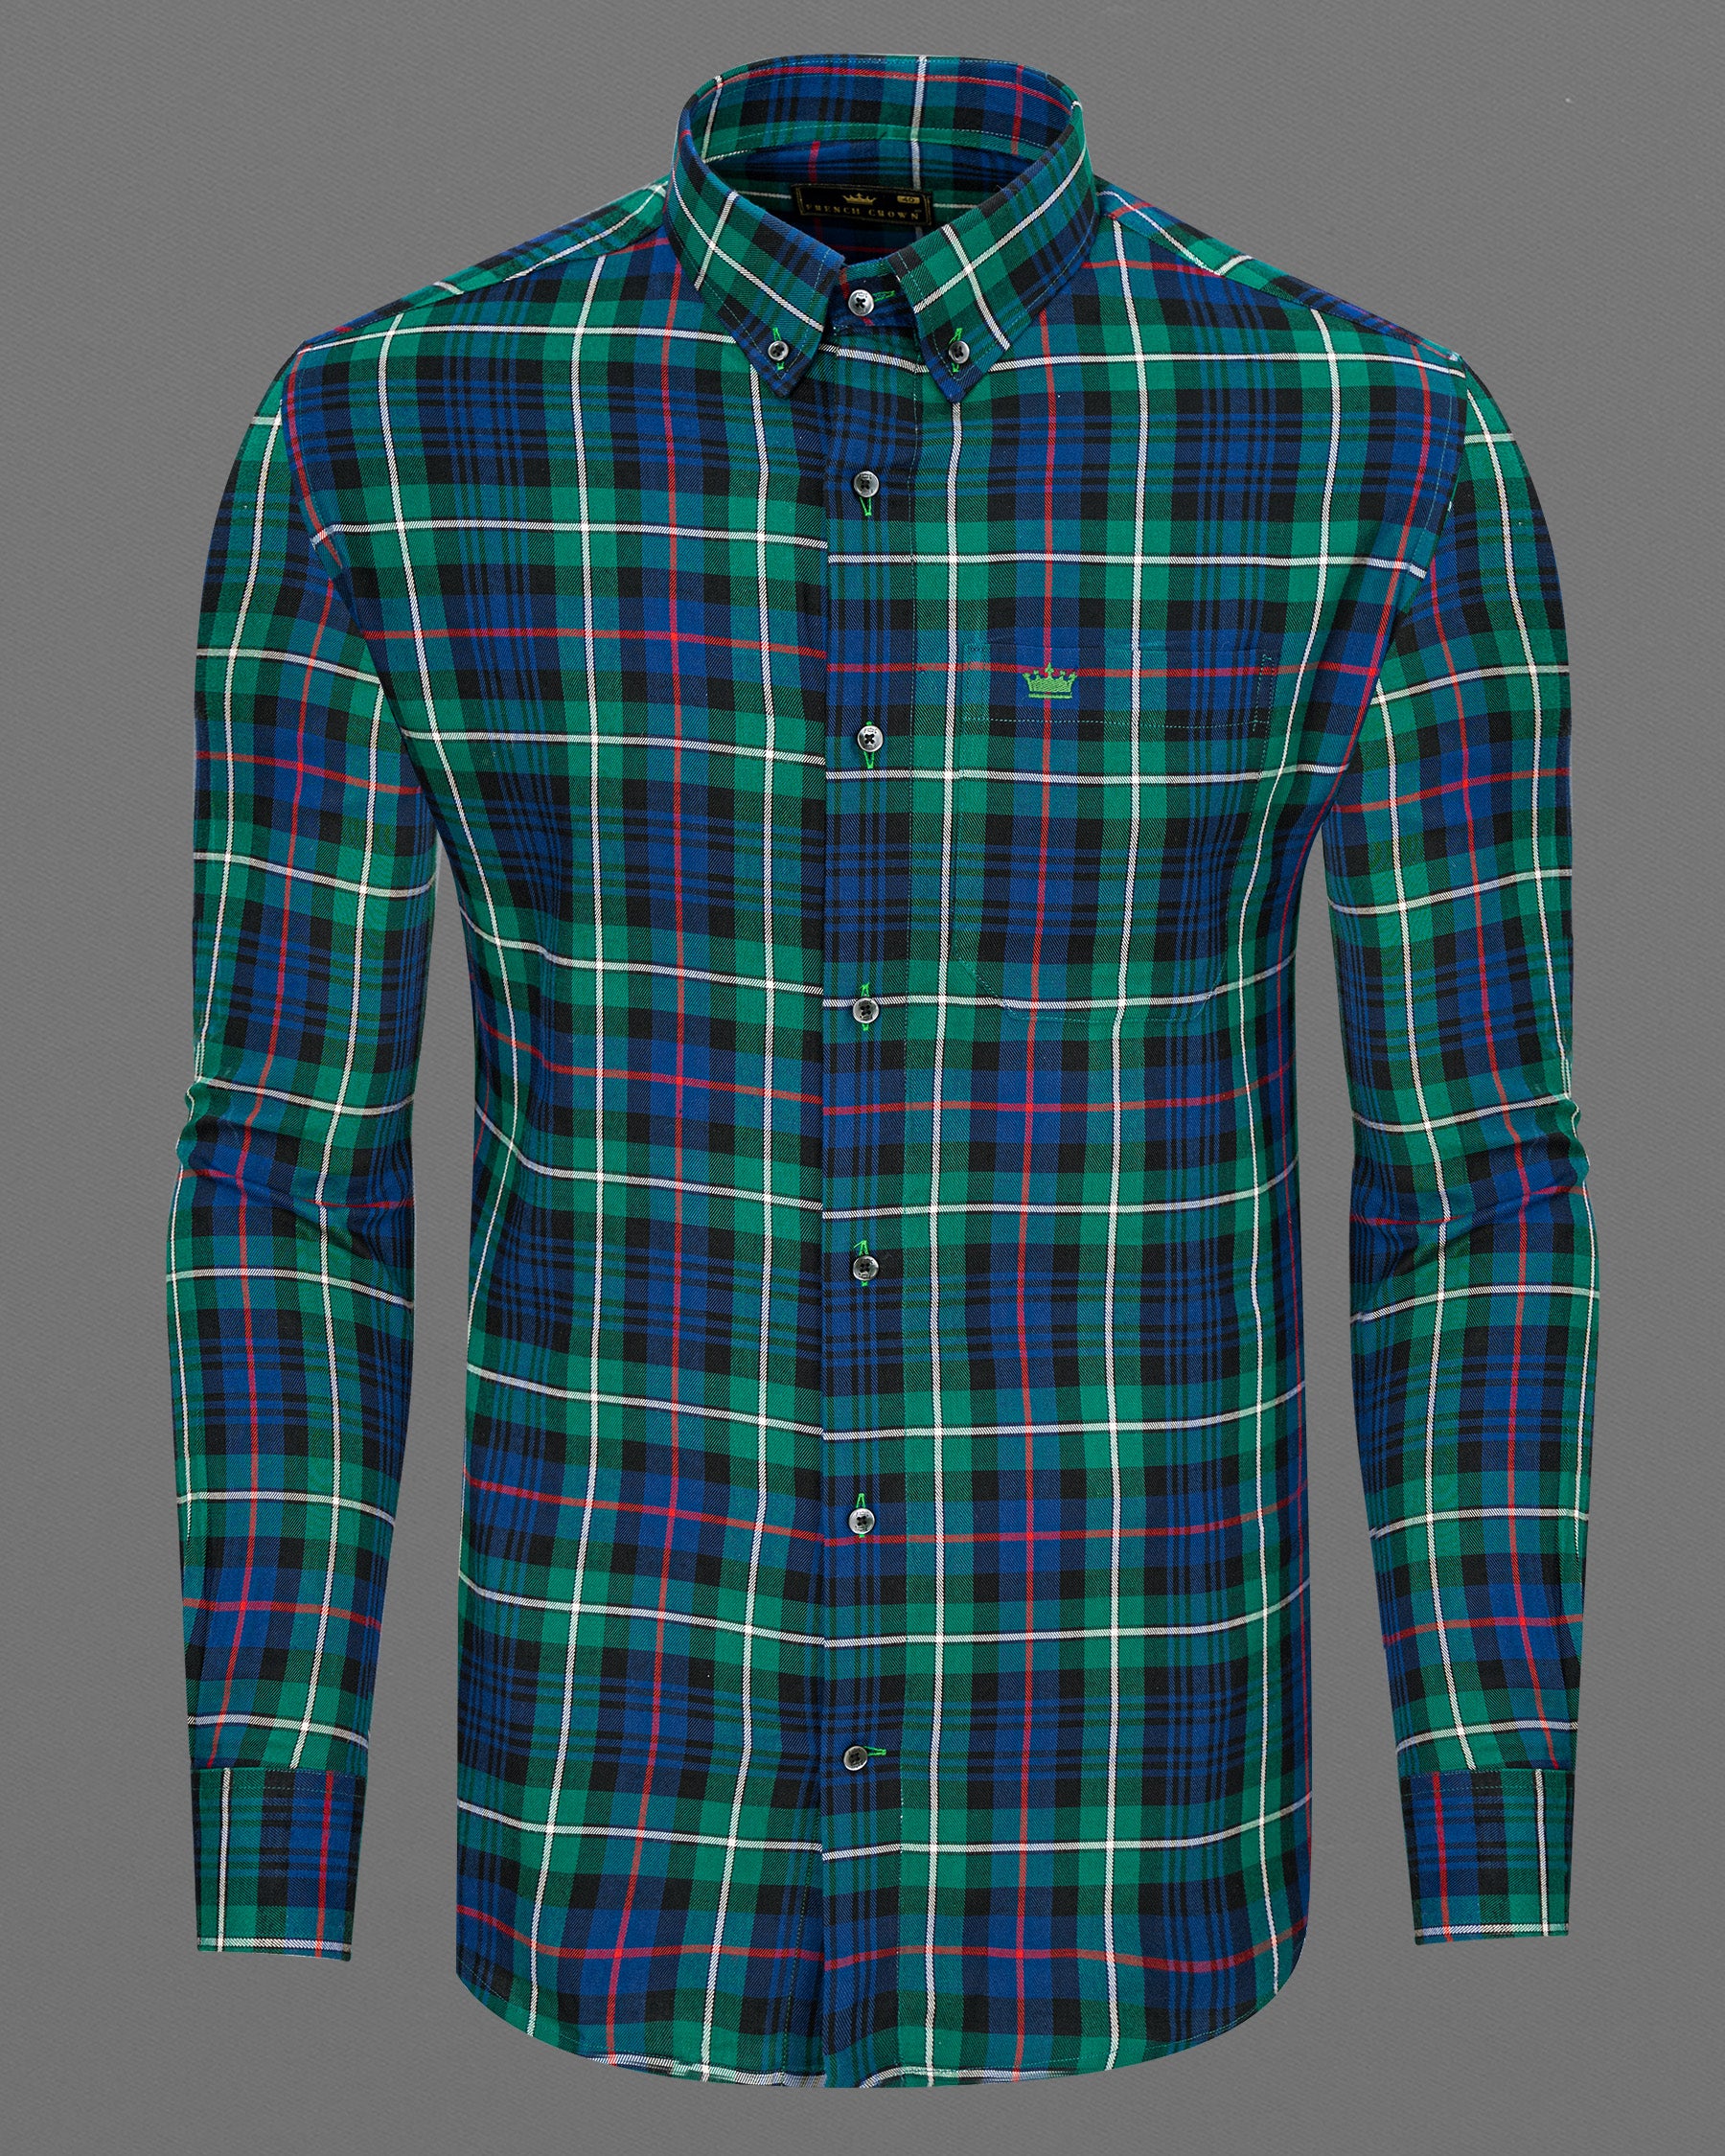 Eucalyptus Green with Chambray Blue Twill Plaid Premium Cotton Shirt